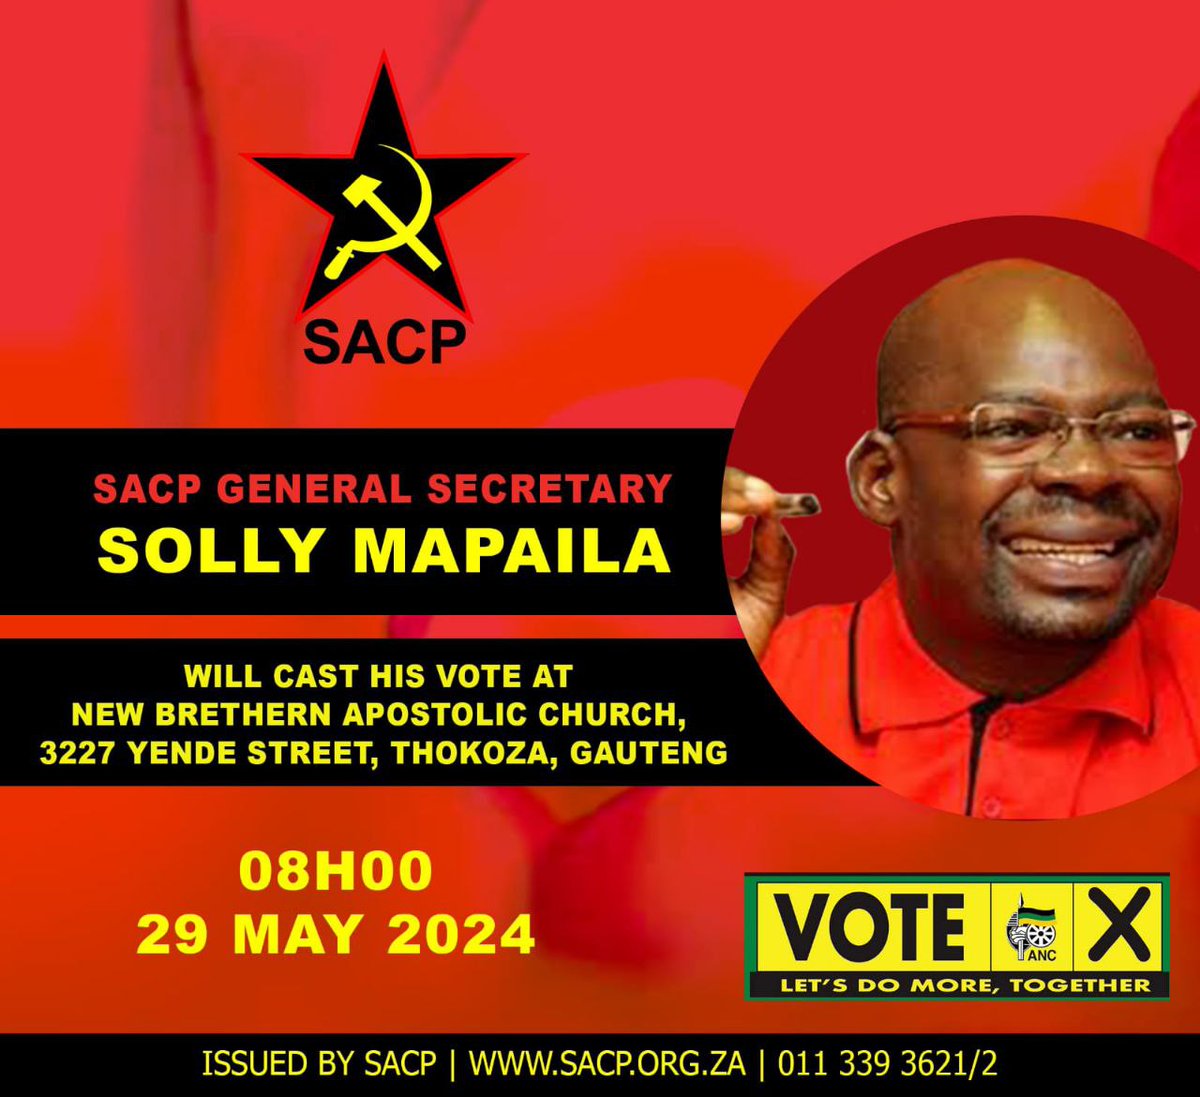 SACP General Secretary, Comrade Solly Mapaila, to cast his vote on #29May2024 in Thokoza Township, Gauteng - New Brethren Apostolic Church.

#VOTEANC29May2024 #VoteANC #VOTEANC2024 #Vote2024